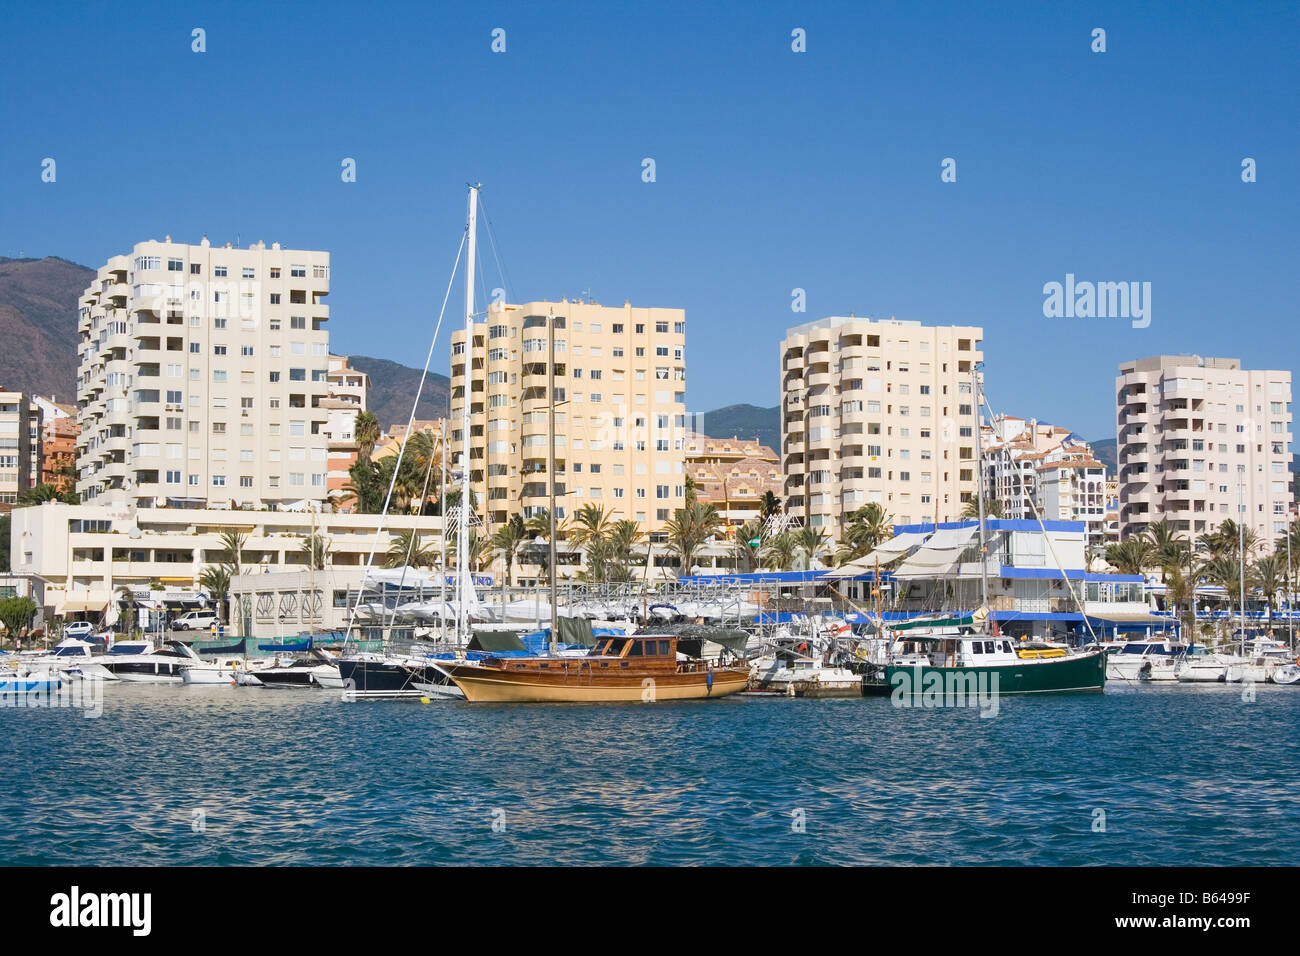 Estepona Costa del Sol Malaga Provinz Spanien Boote vor Anker im Hafen Stockfoto